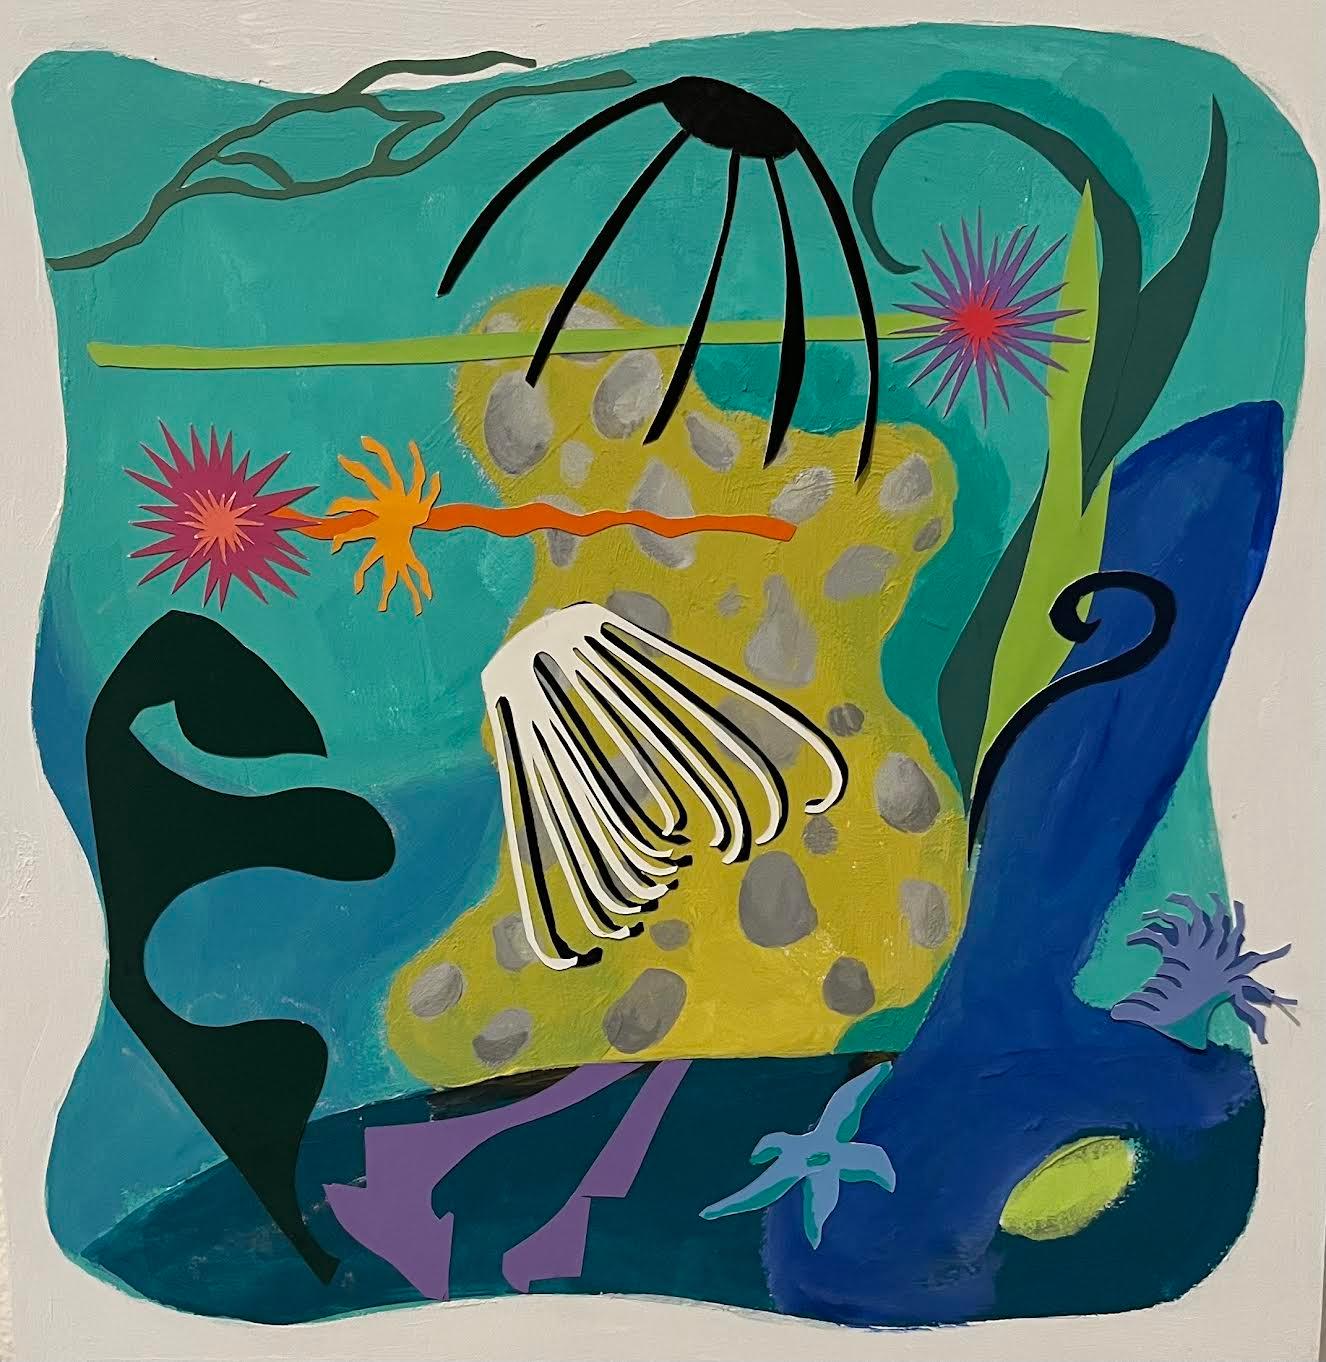 Seabrush Romp, colorful, undersea scene, aquatic , whimsical creatures playful - Mixed Media Art by Philomena Marano